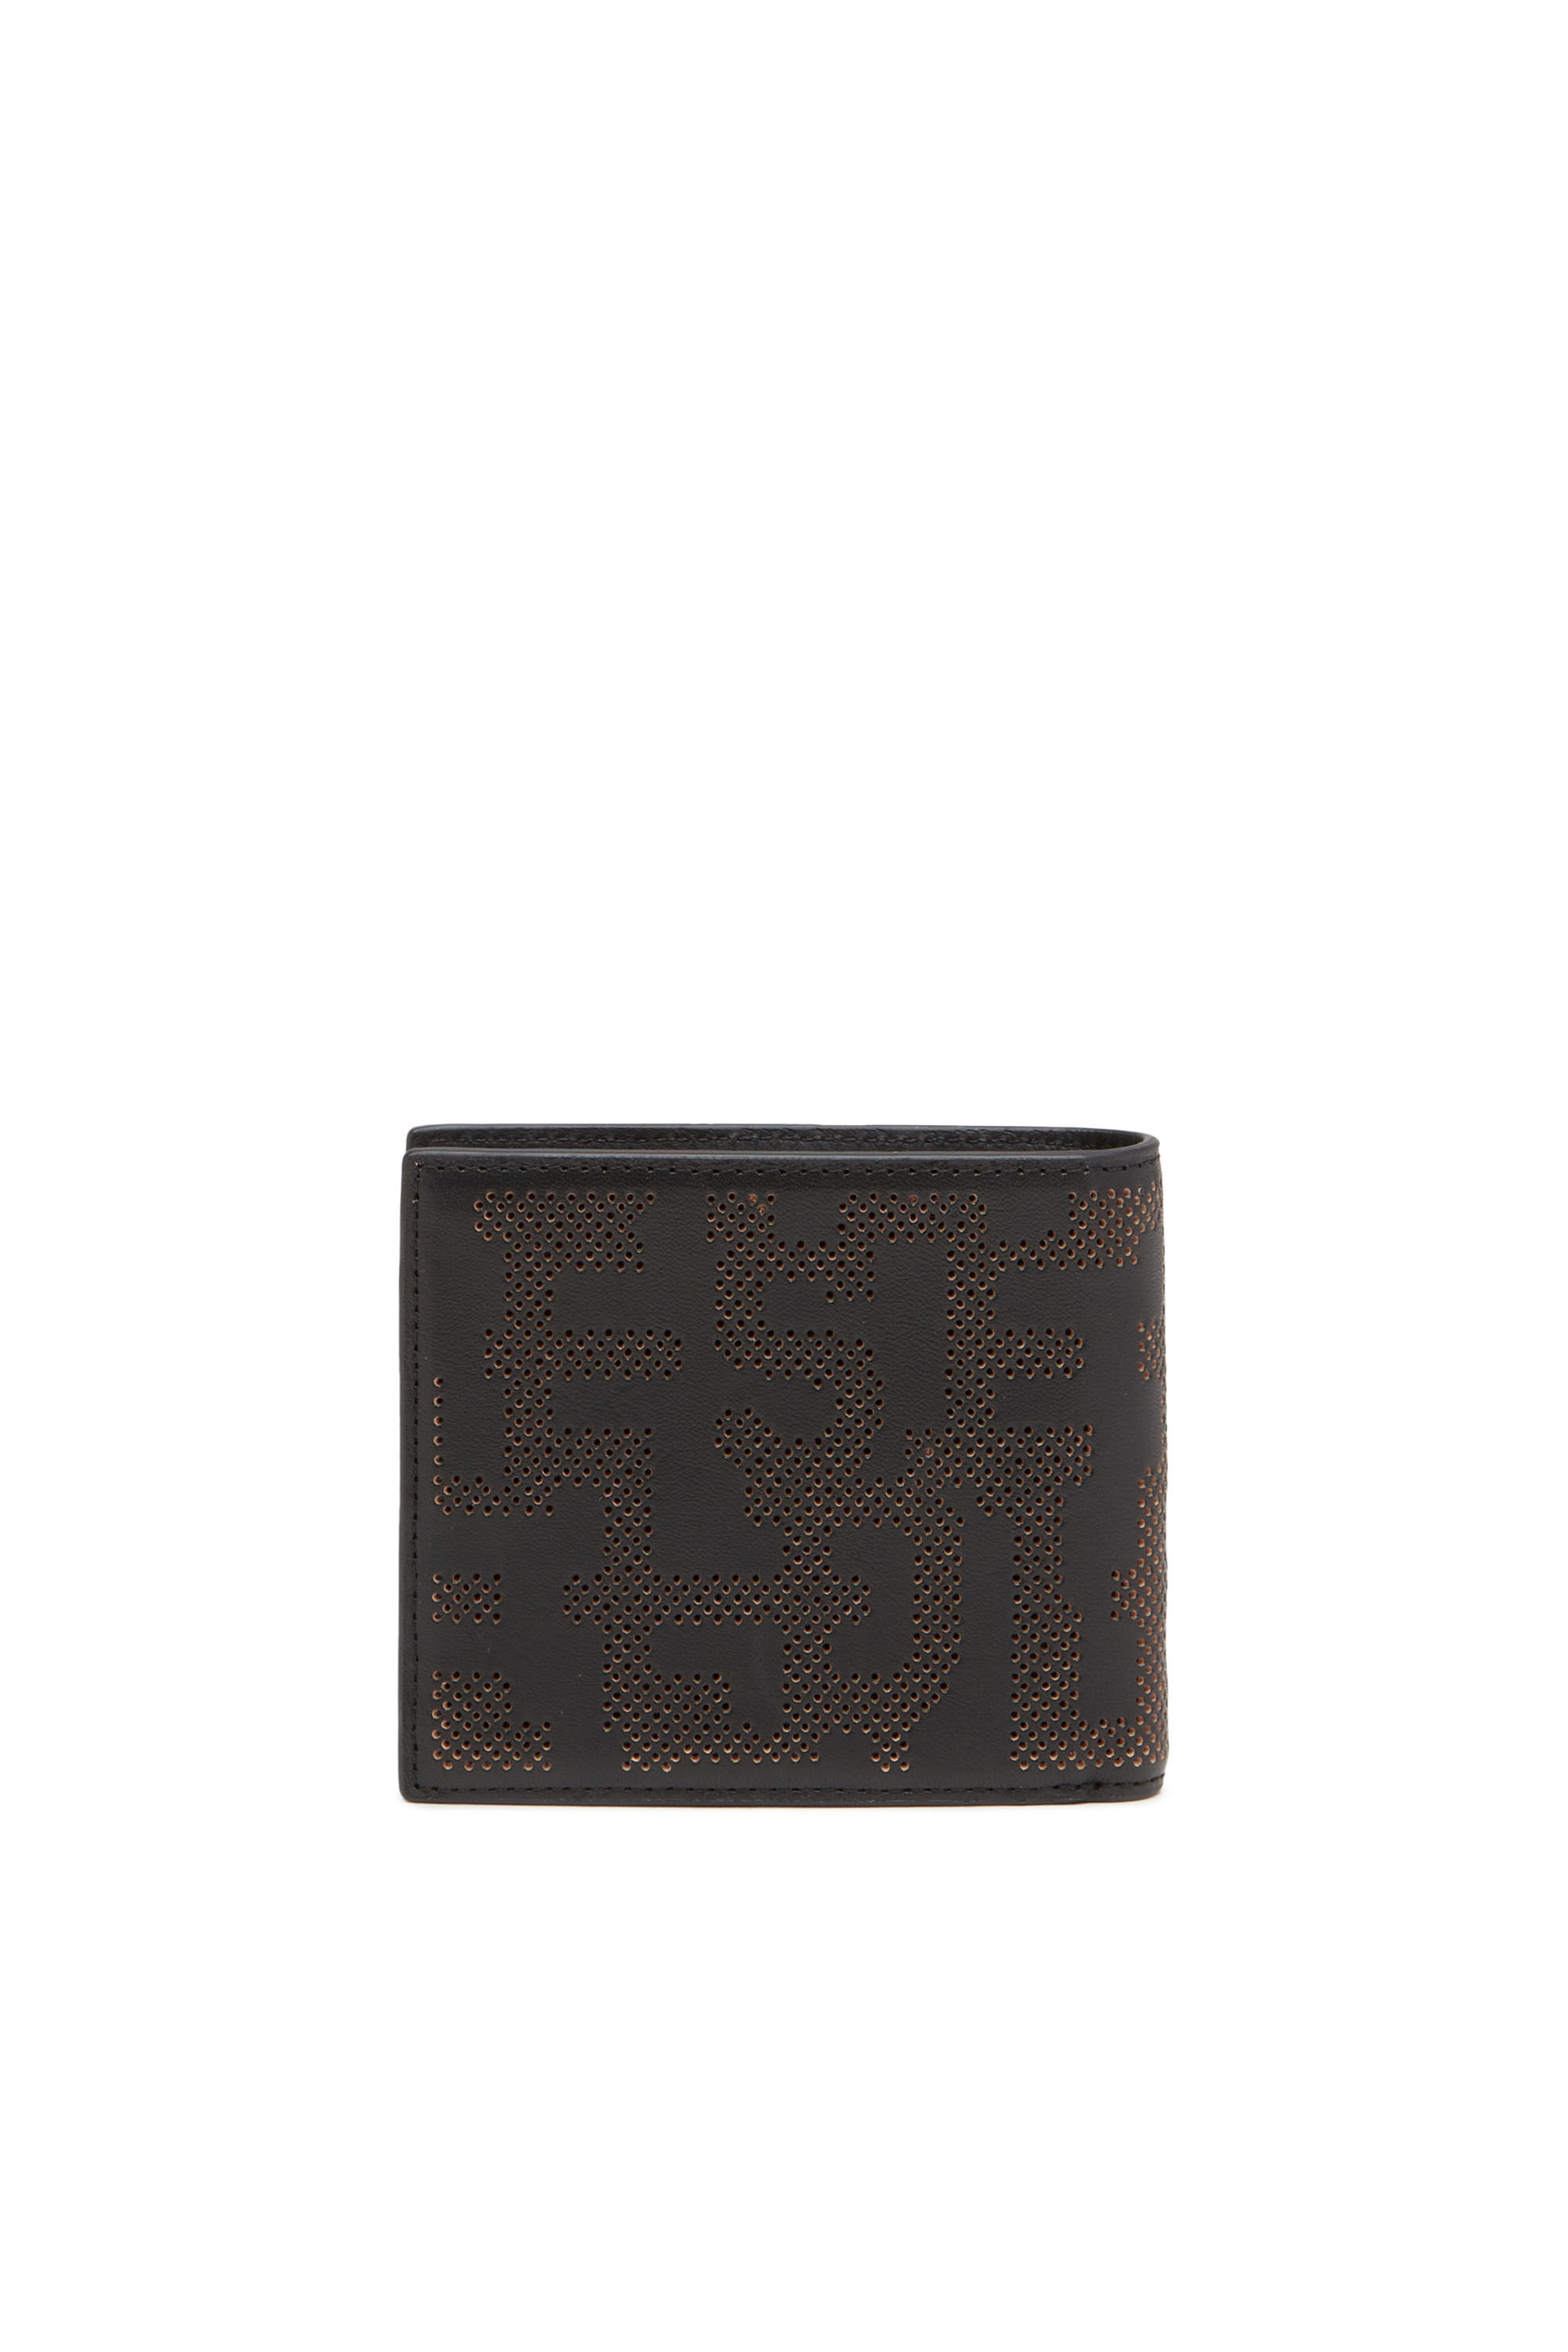 Burberry 'Reg' leather wallet, Men's